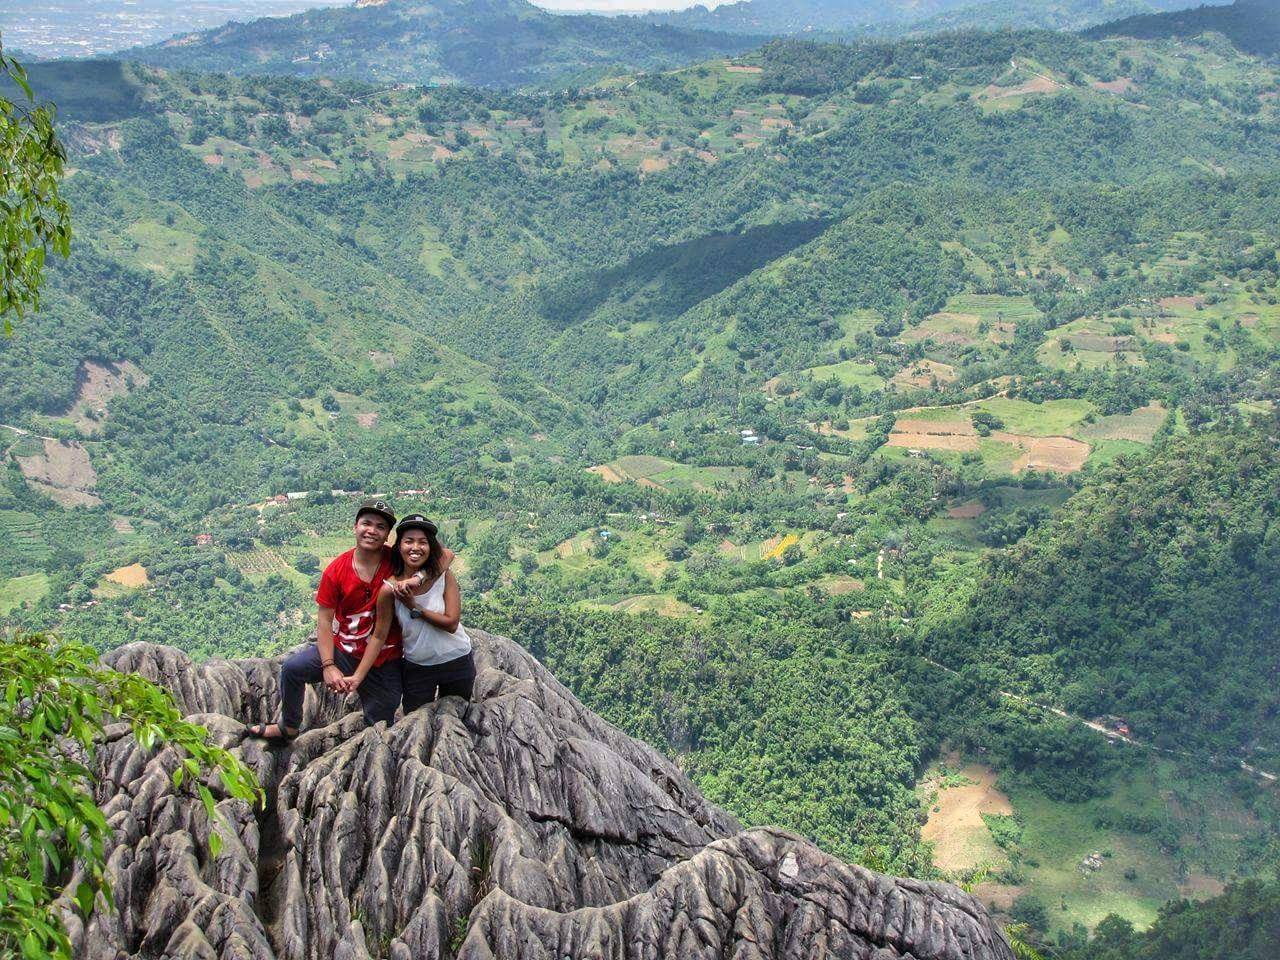 Mt. Mauyog Balamban